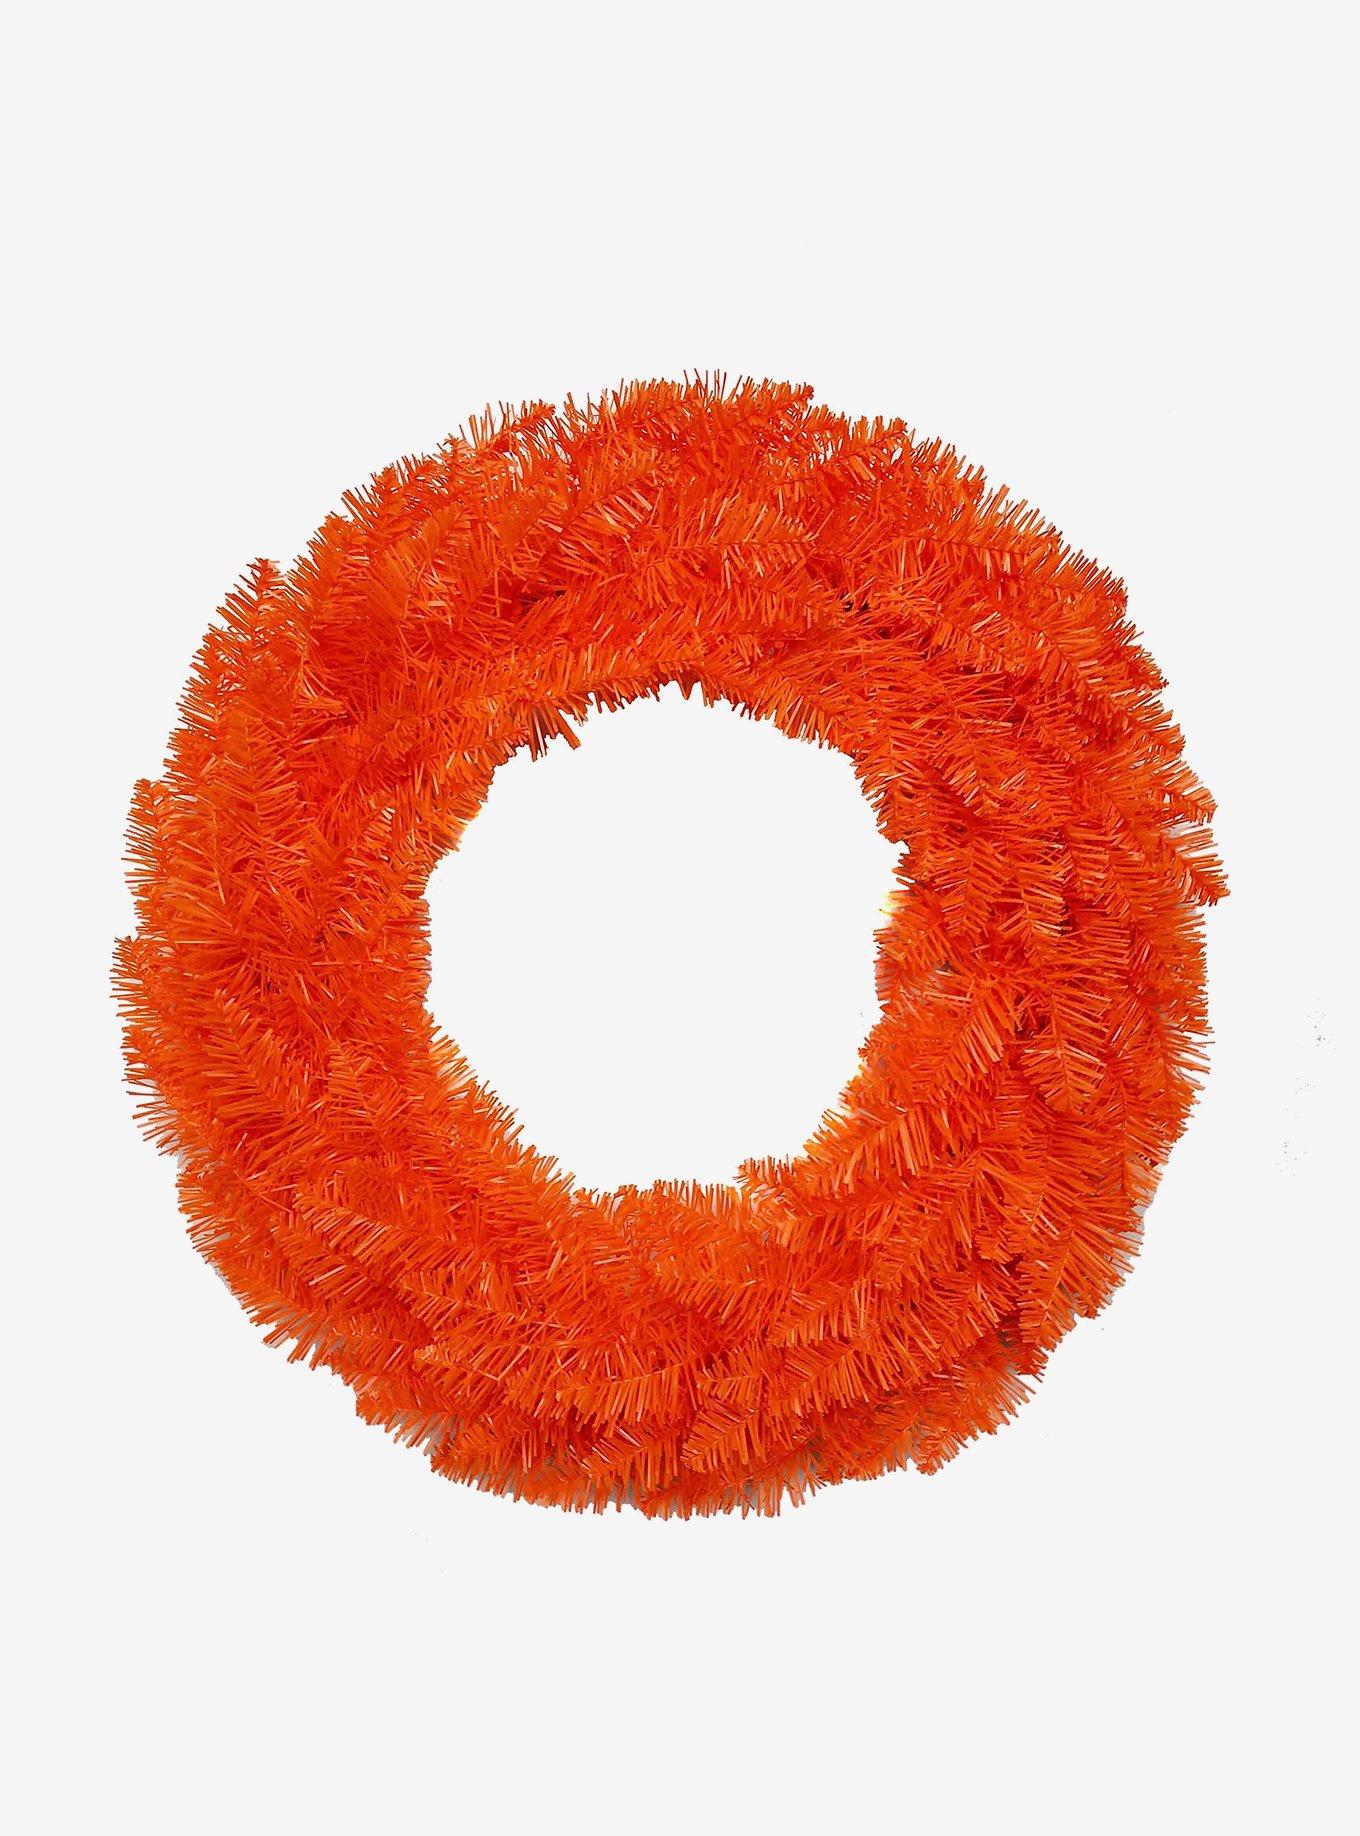 Kurt Adler 24-inch Unlit Orange Wreath